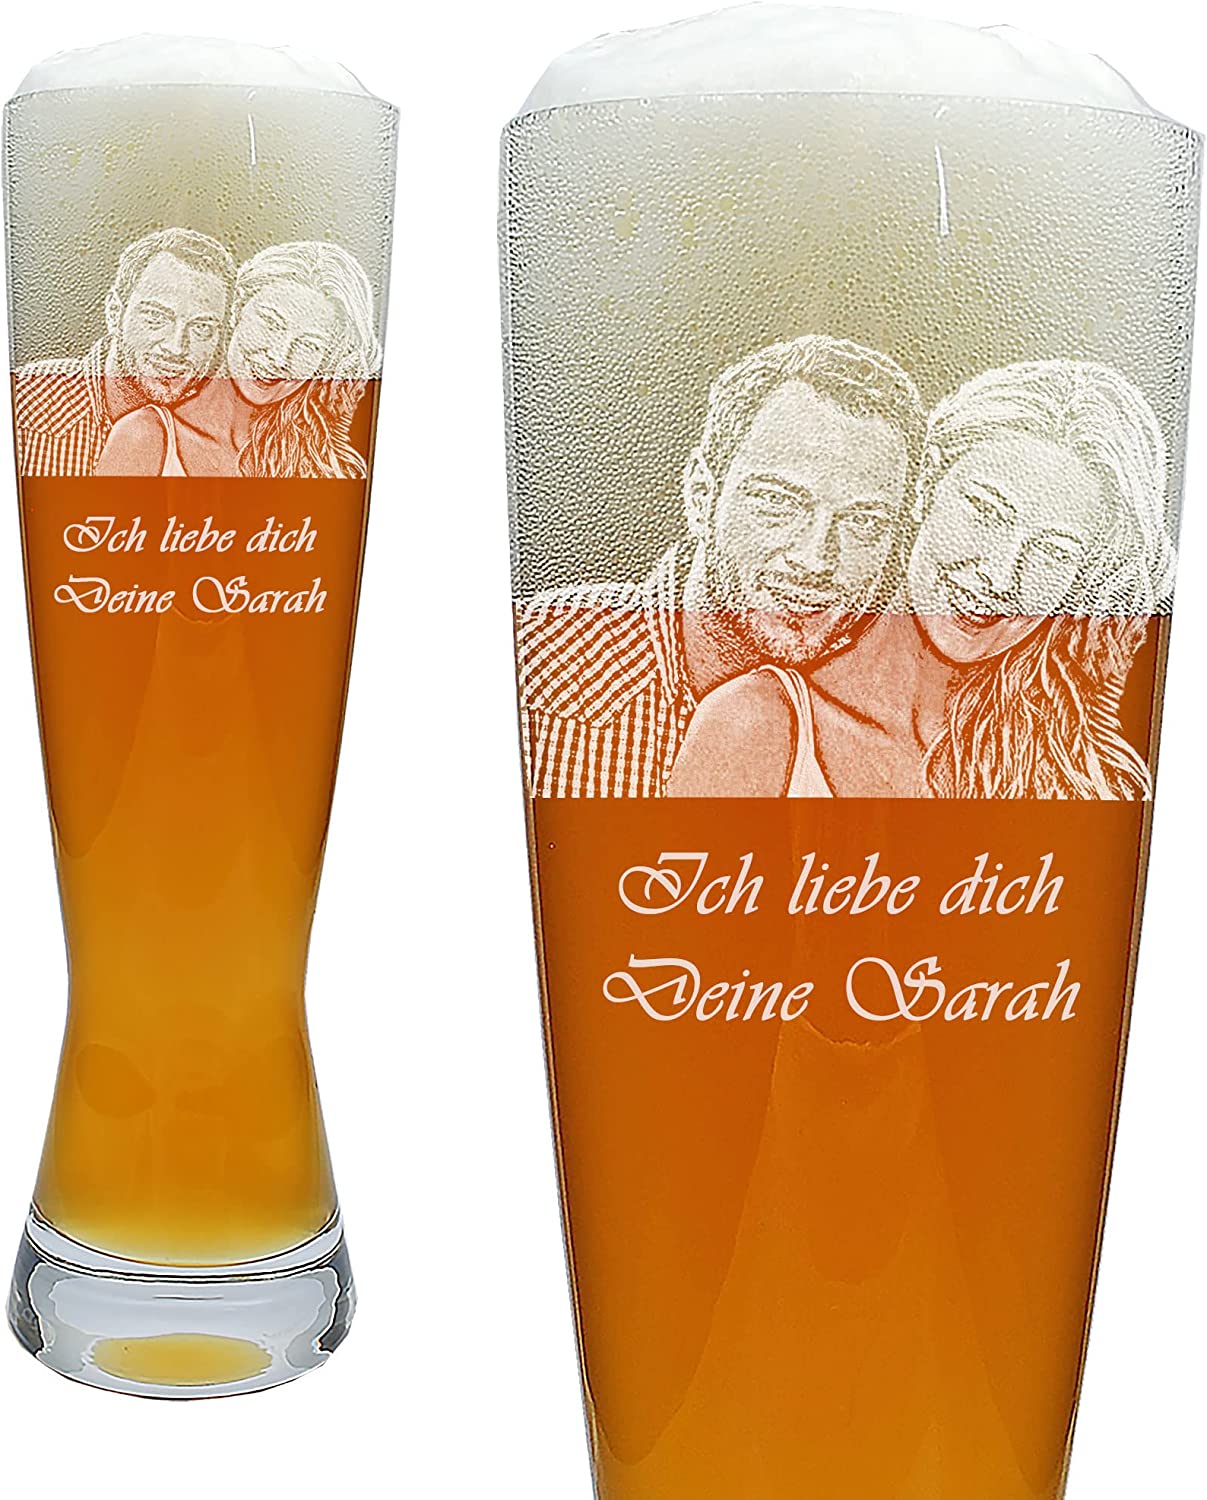 Spiegelau & Nachtmann Spiegelau Wheat Beer Glass 0.5 Litres with Photo Engraving